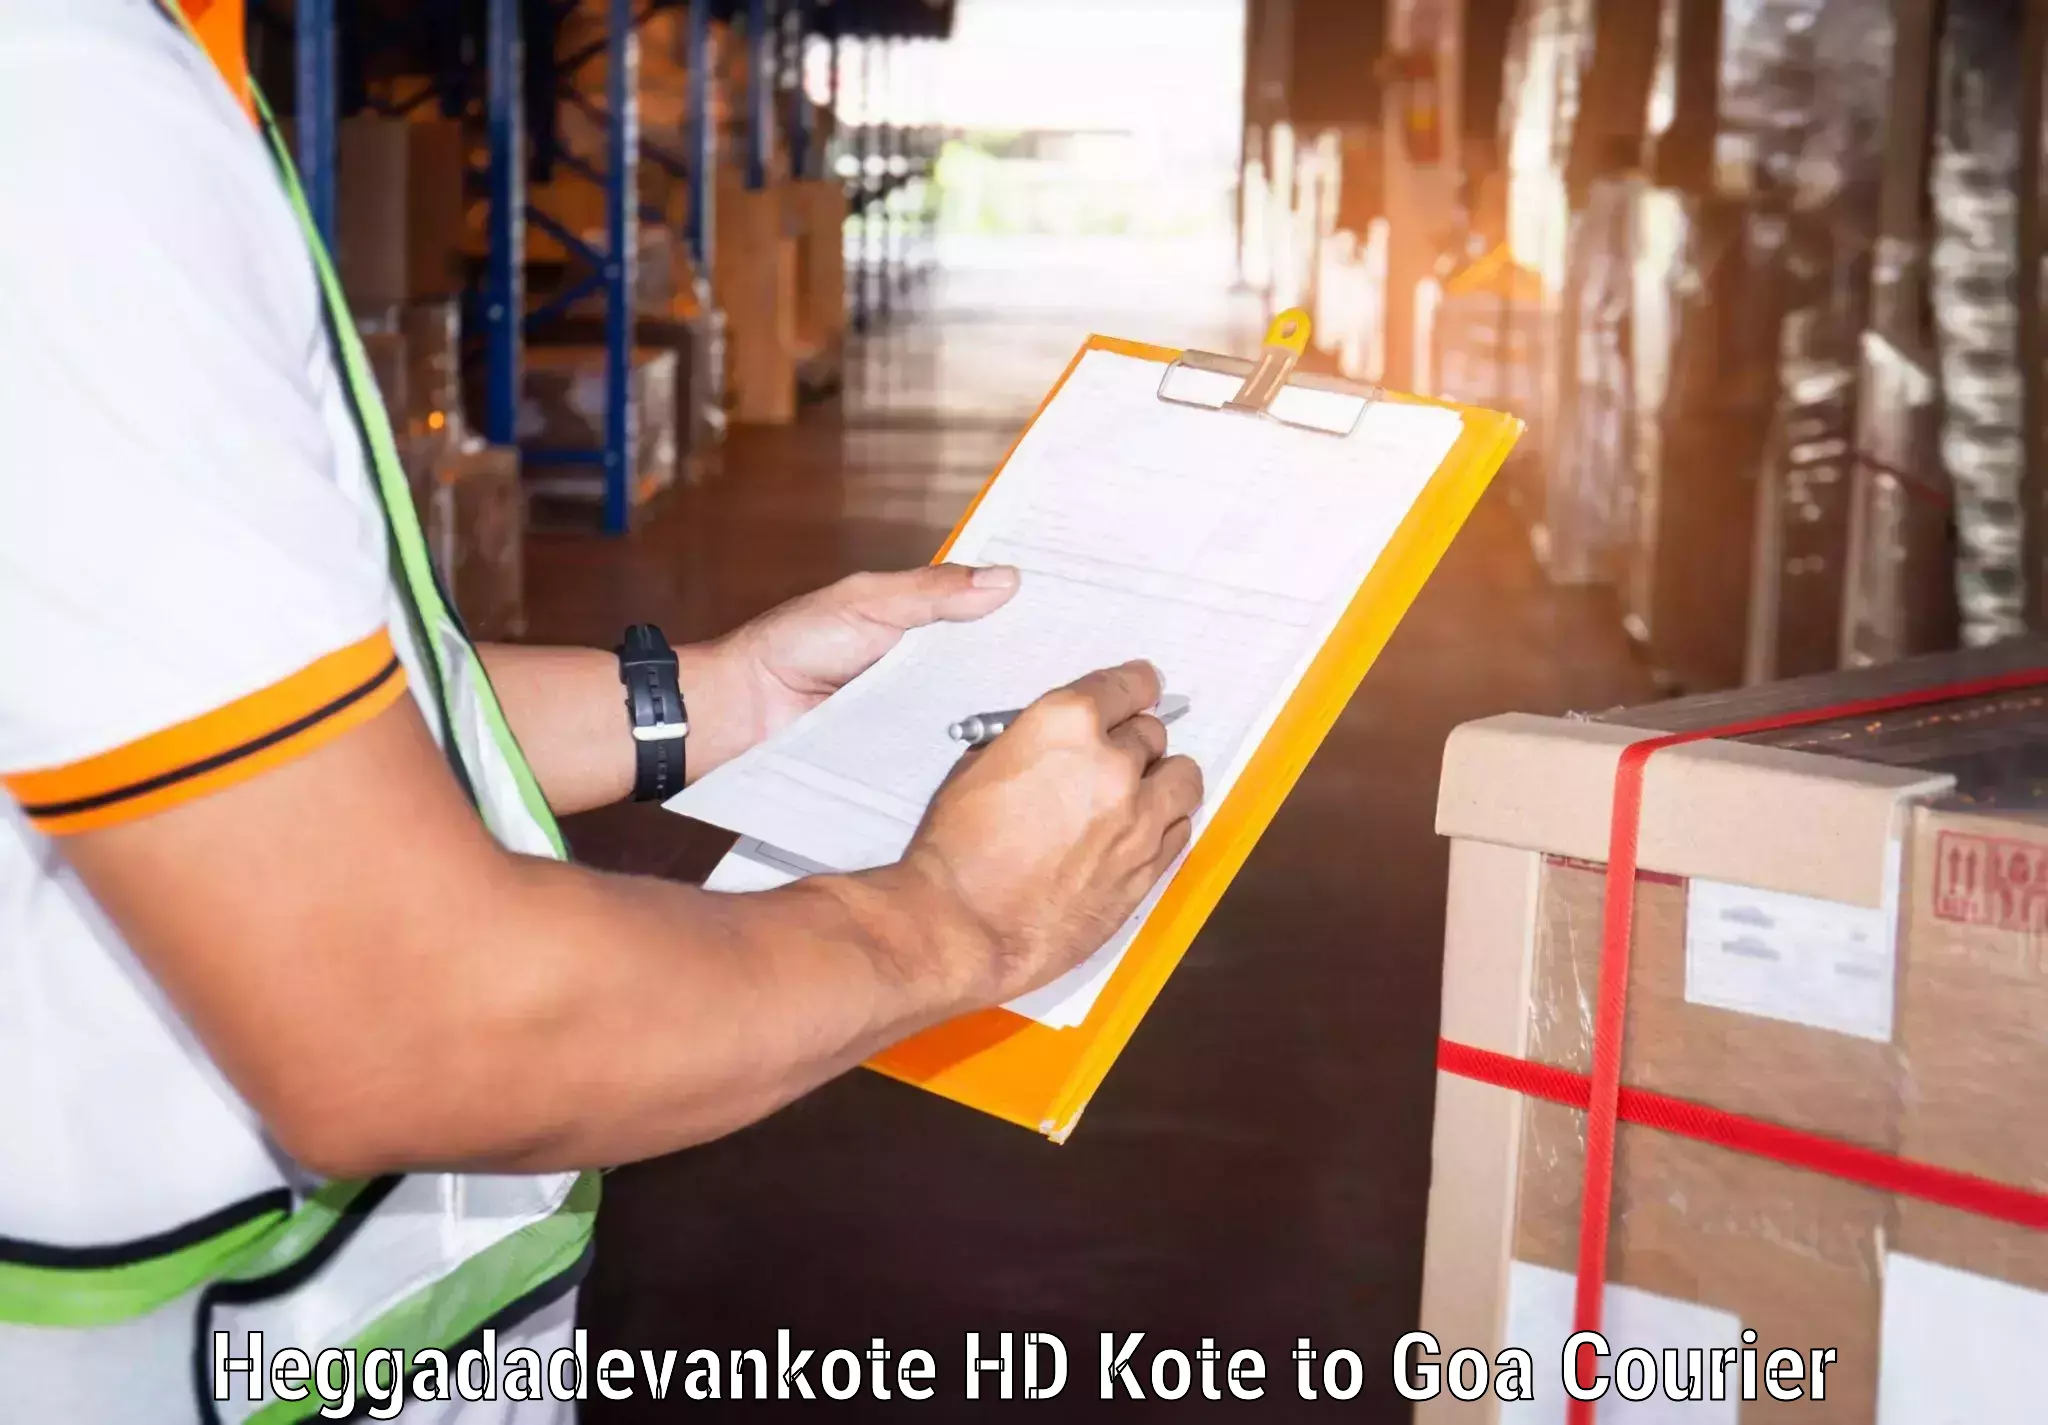 Emergency parcel delivery Heggadadevankote HD Kote to South Goa